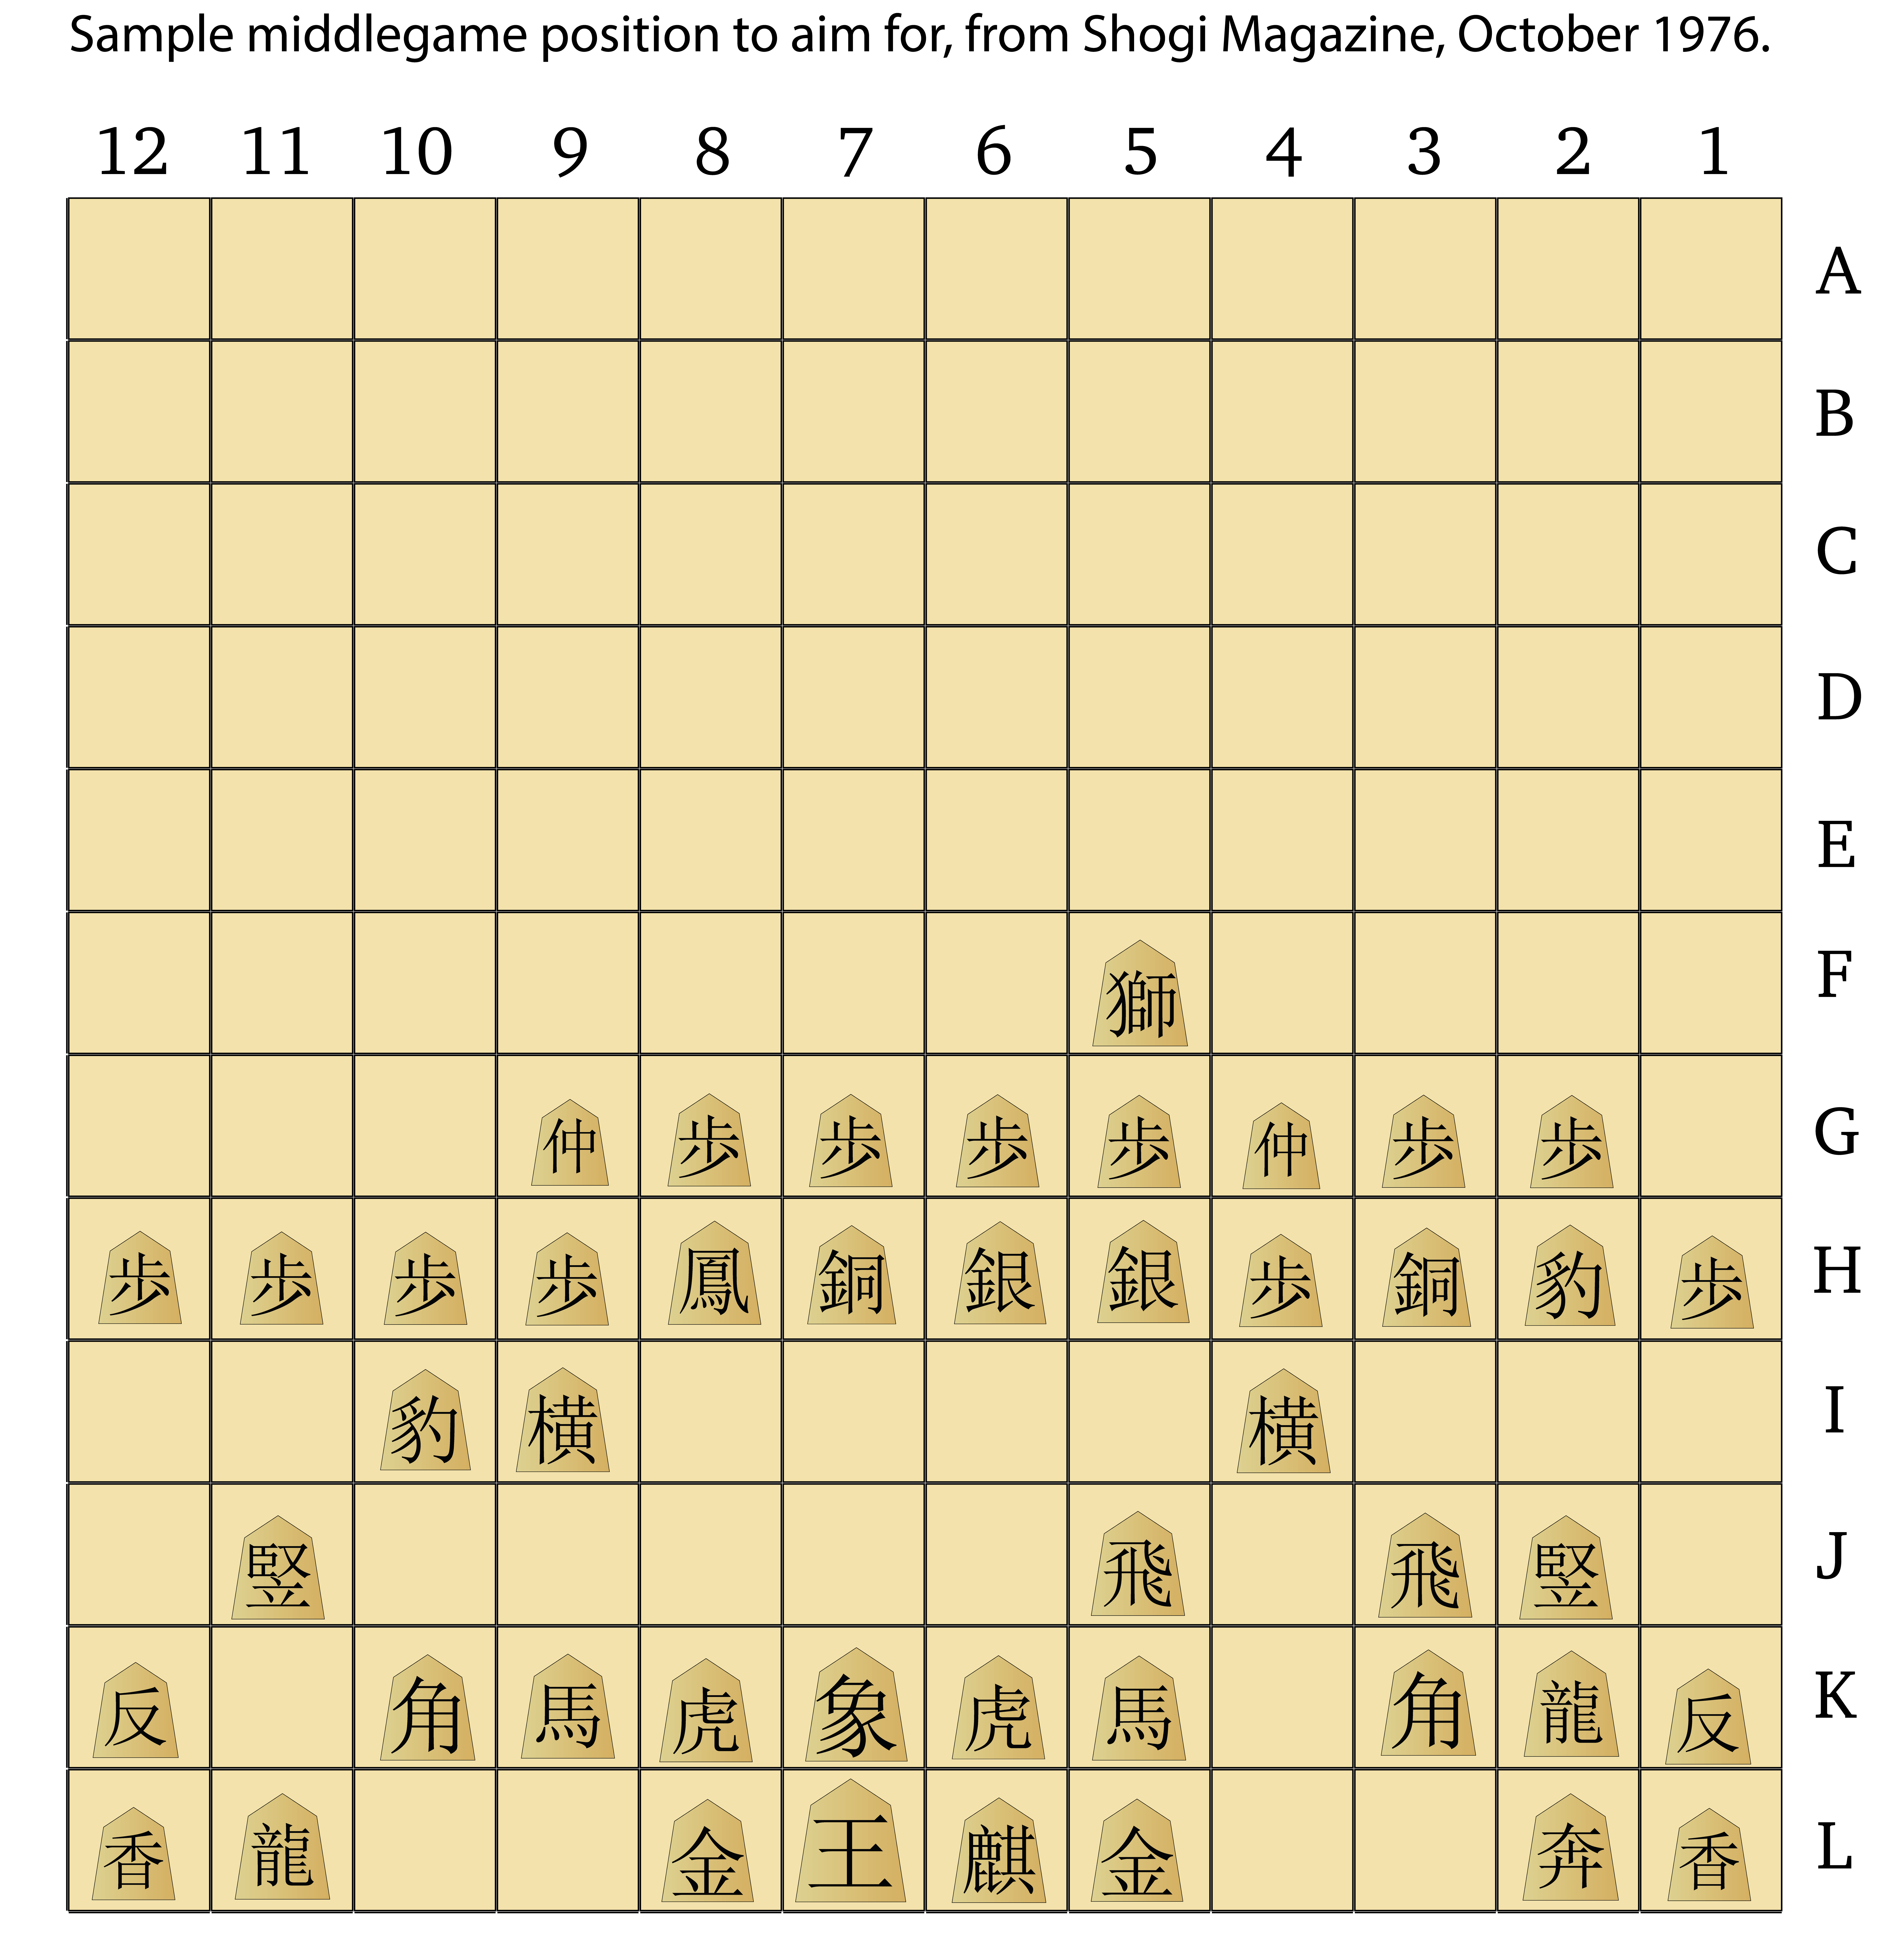 chu-shogi-sample-midgame-position-01